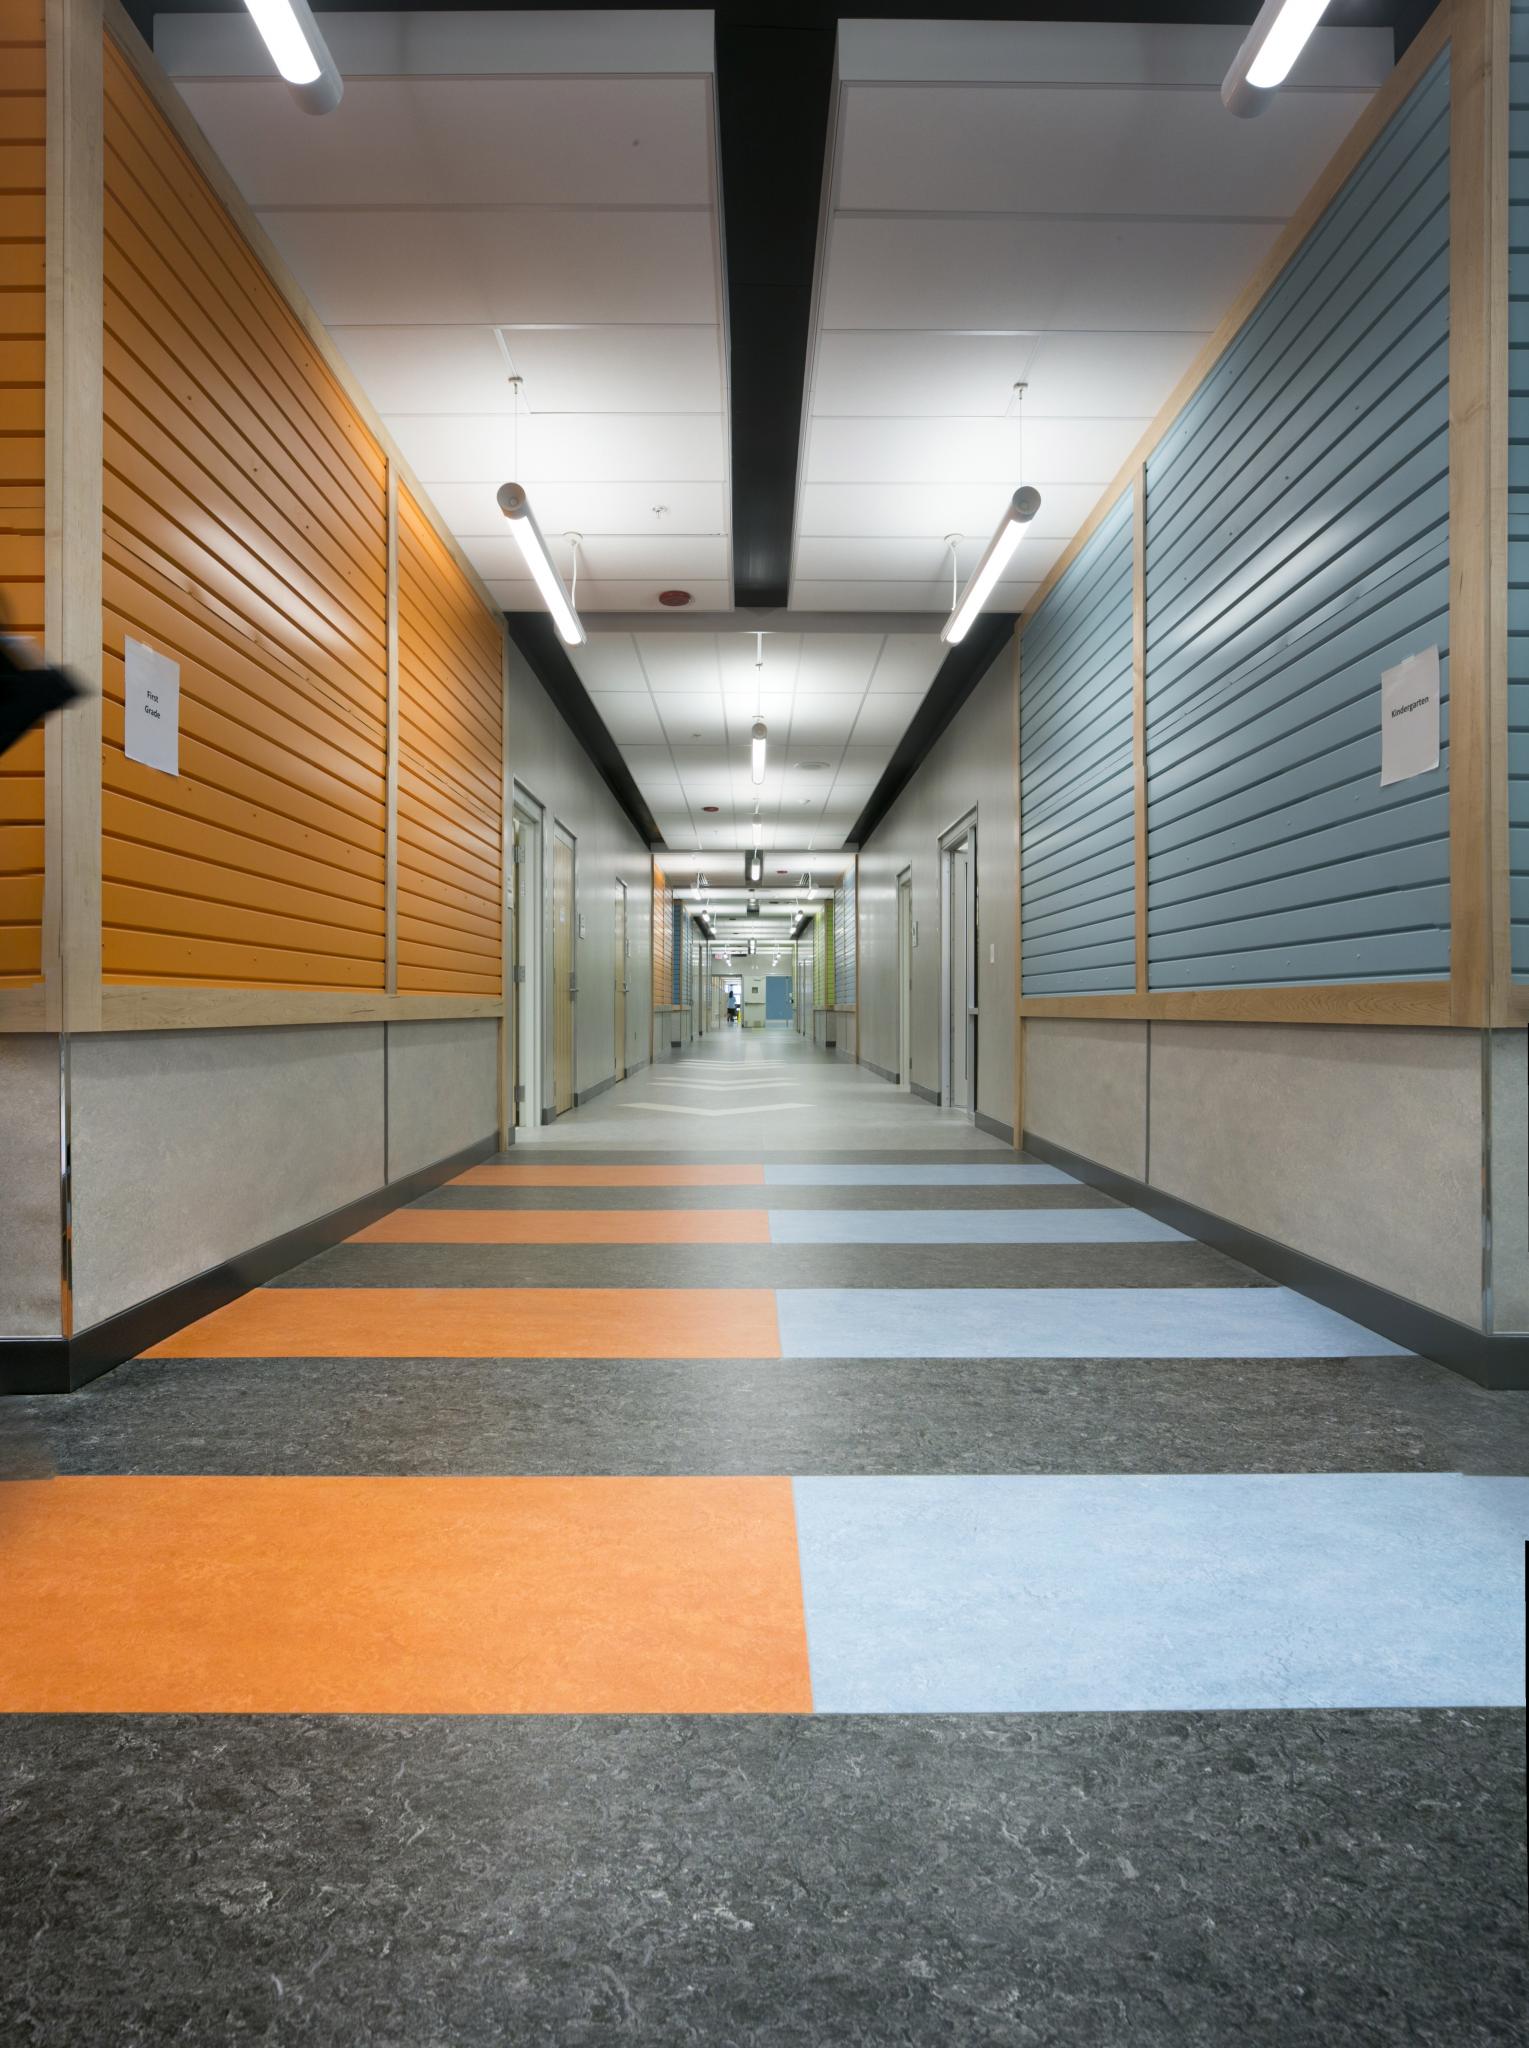 image of a hallway